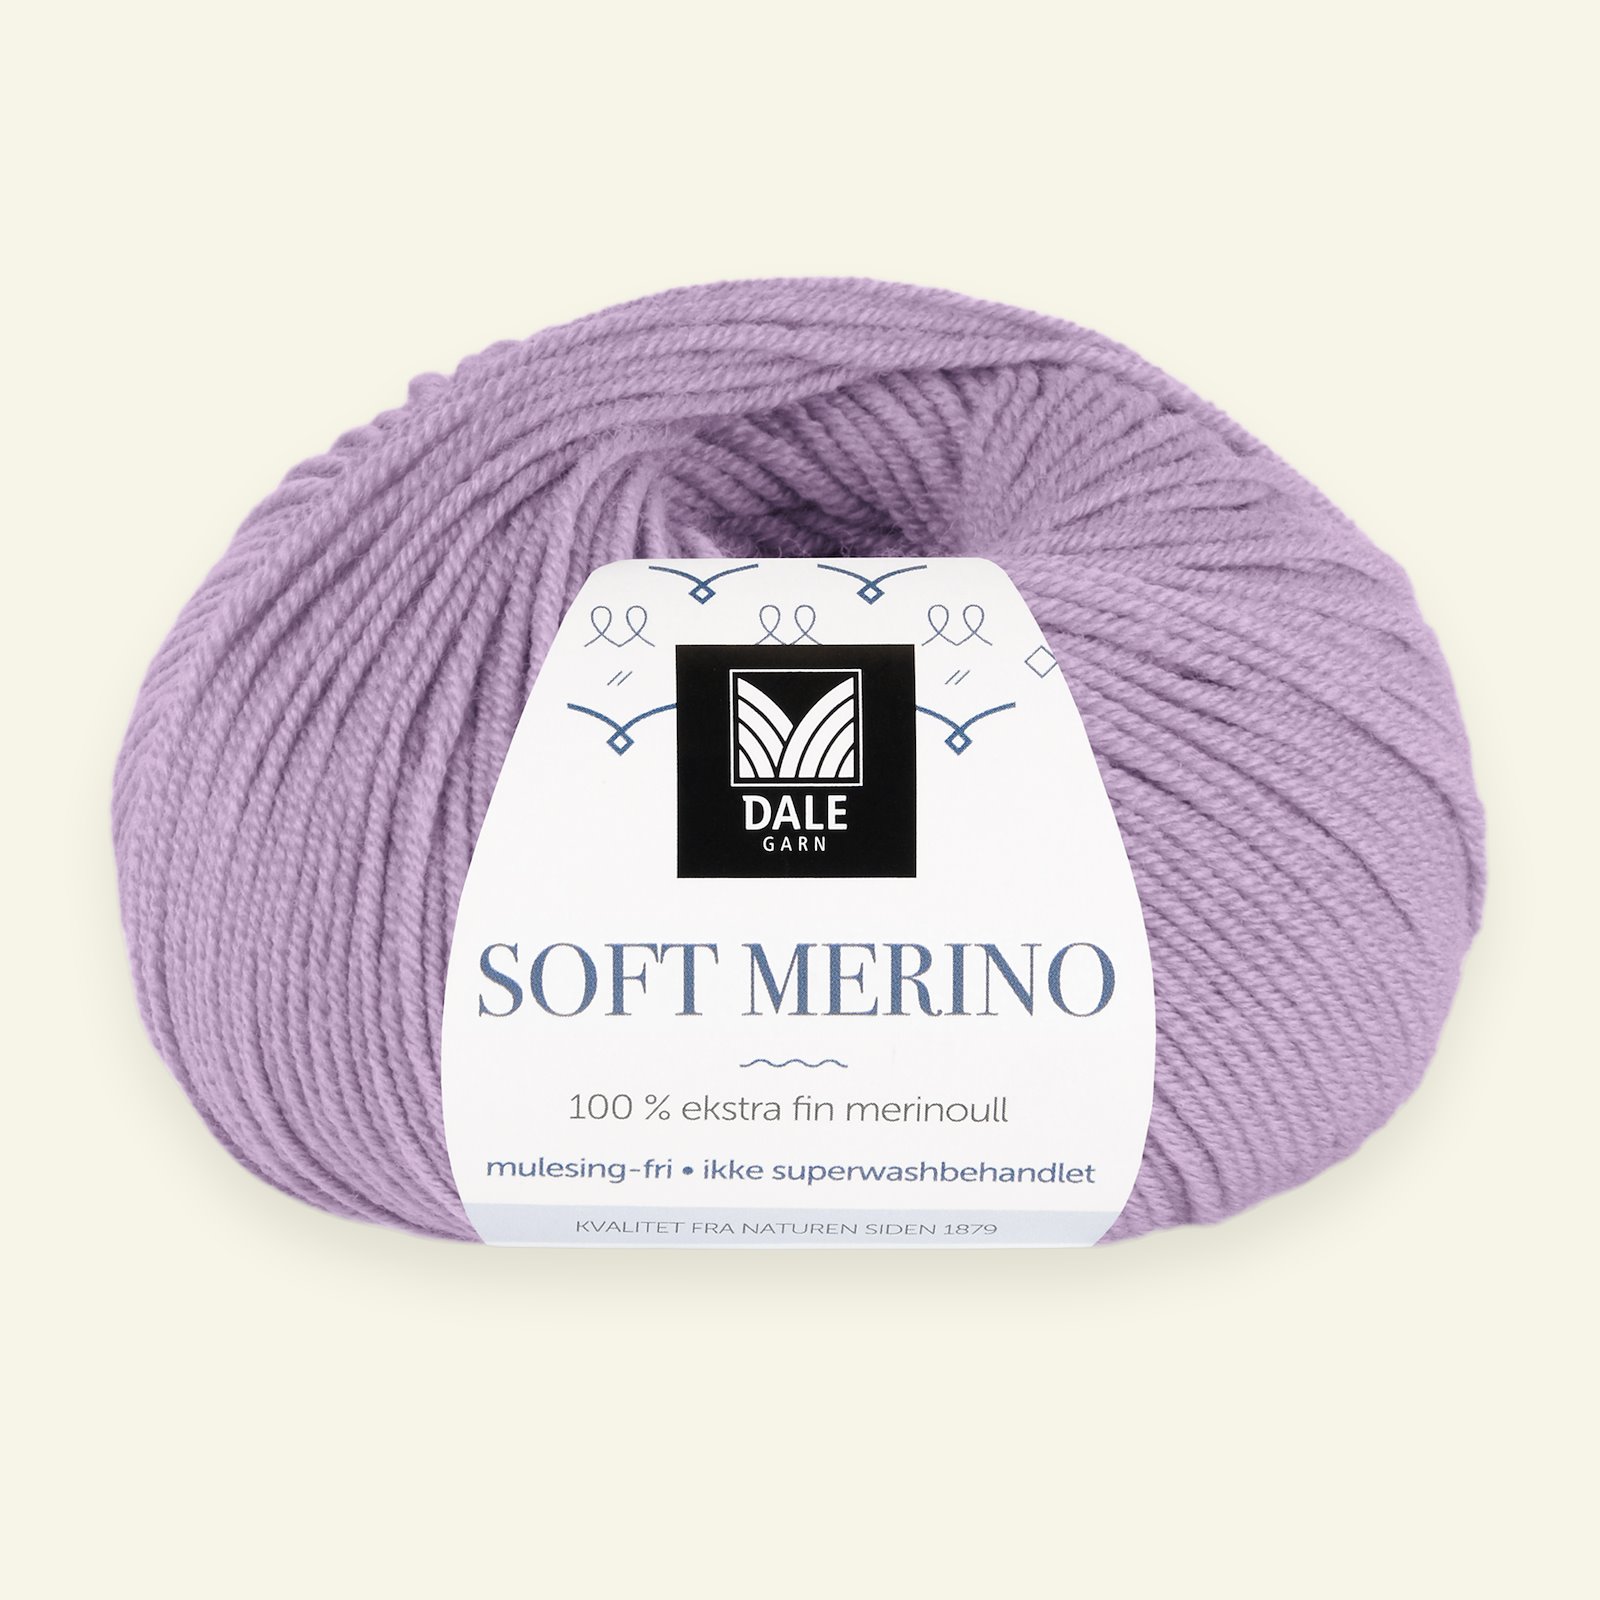 Dale Garn, 100% extra fine merino wool yarn, "Soft Merino", light lavender (3026) 90000347_pack